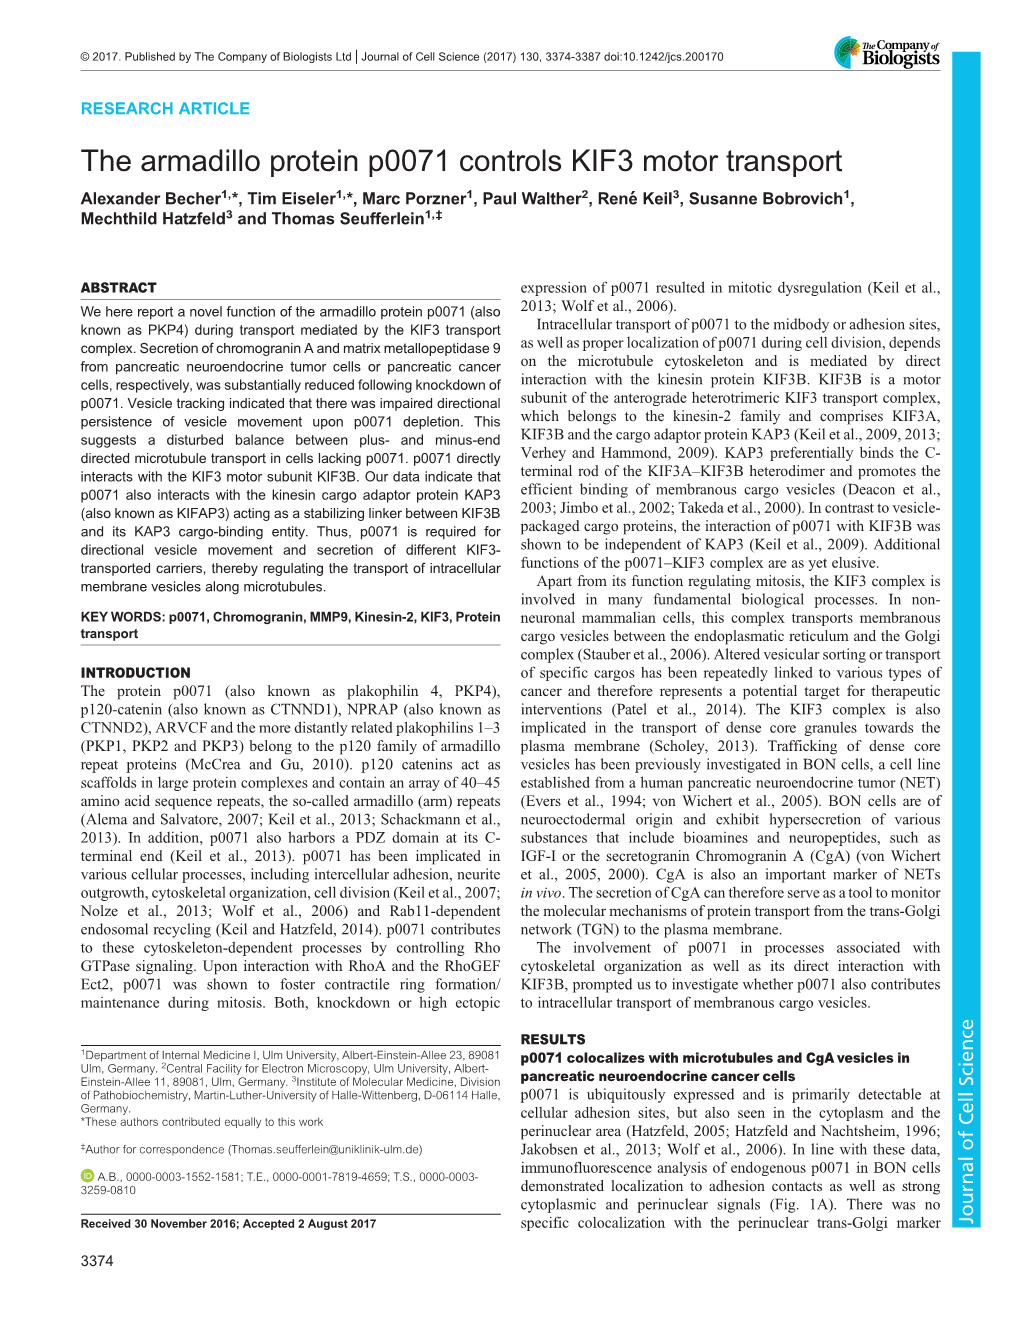 The Armadillo Protein P0071 Controls KIF3 Motor Transport